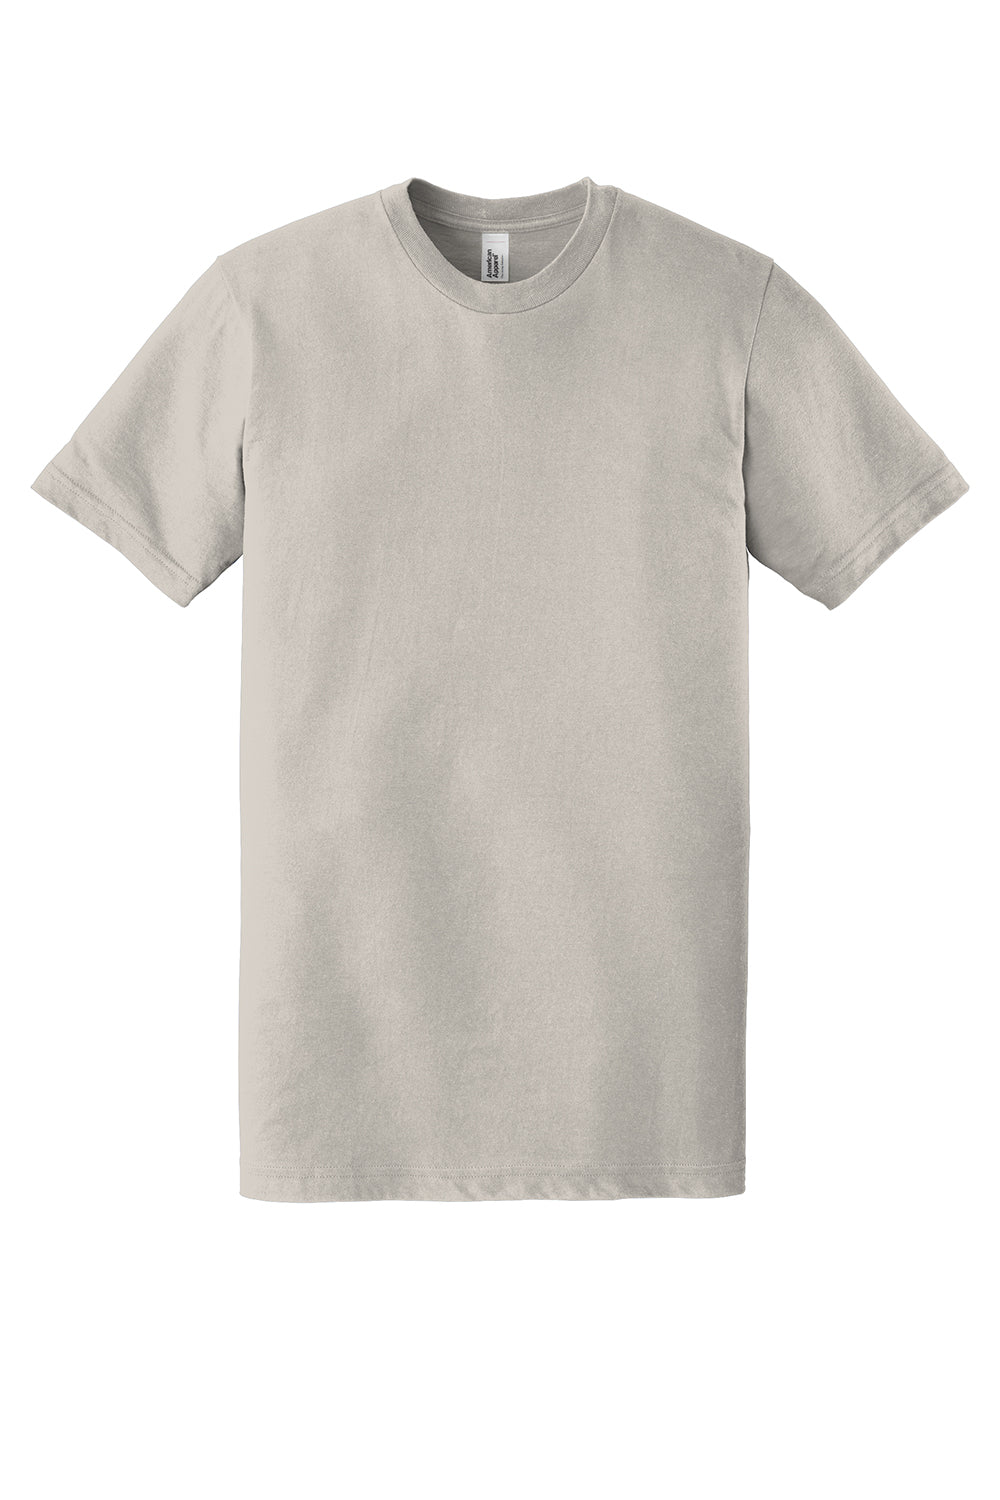 American Apparel 2001 Mens Fine Jersey Short Sleeve Crewneck T-Shirt New Silver Grey Flat Front